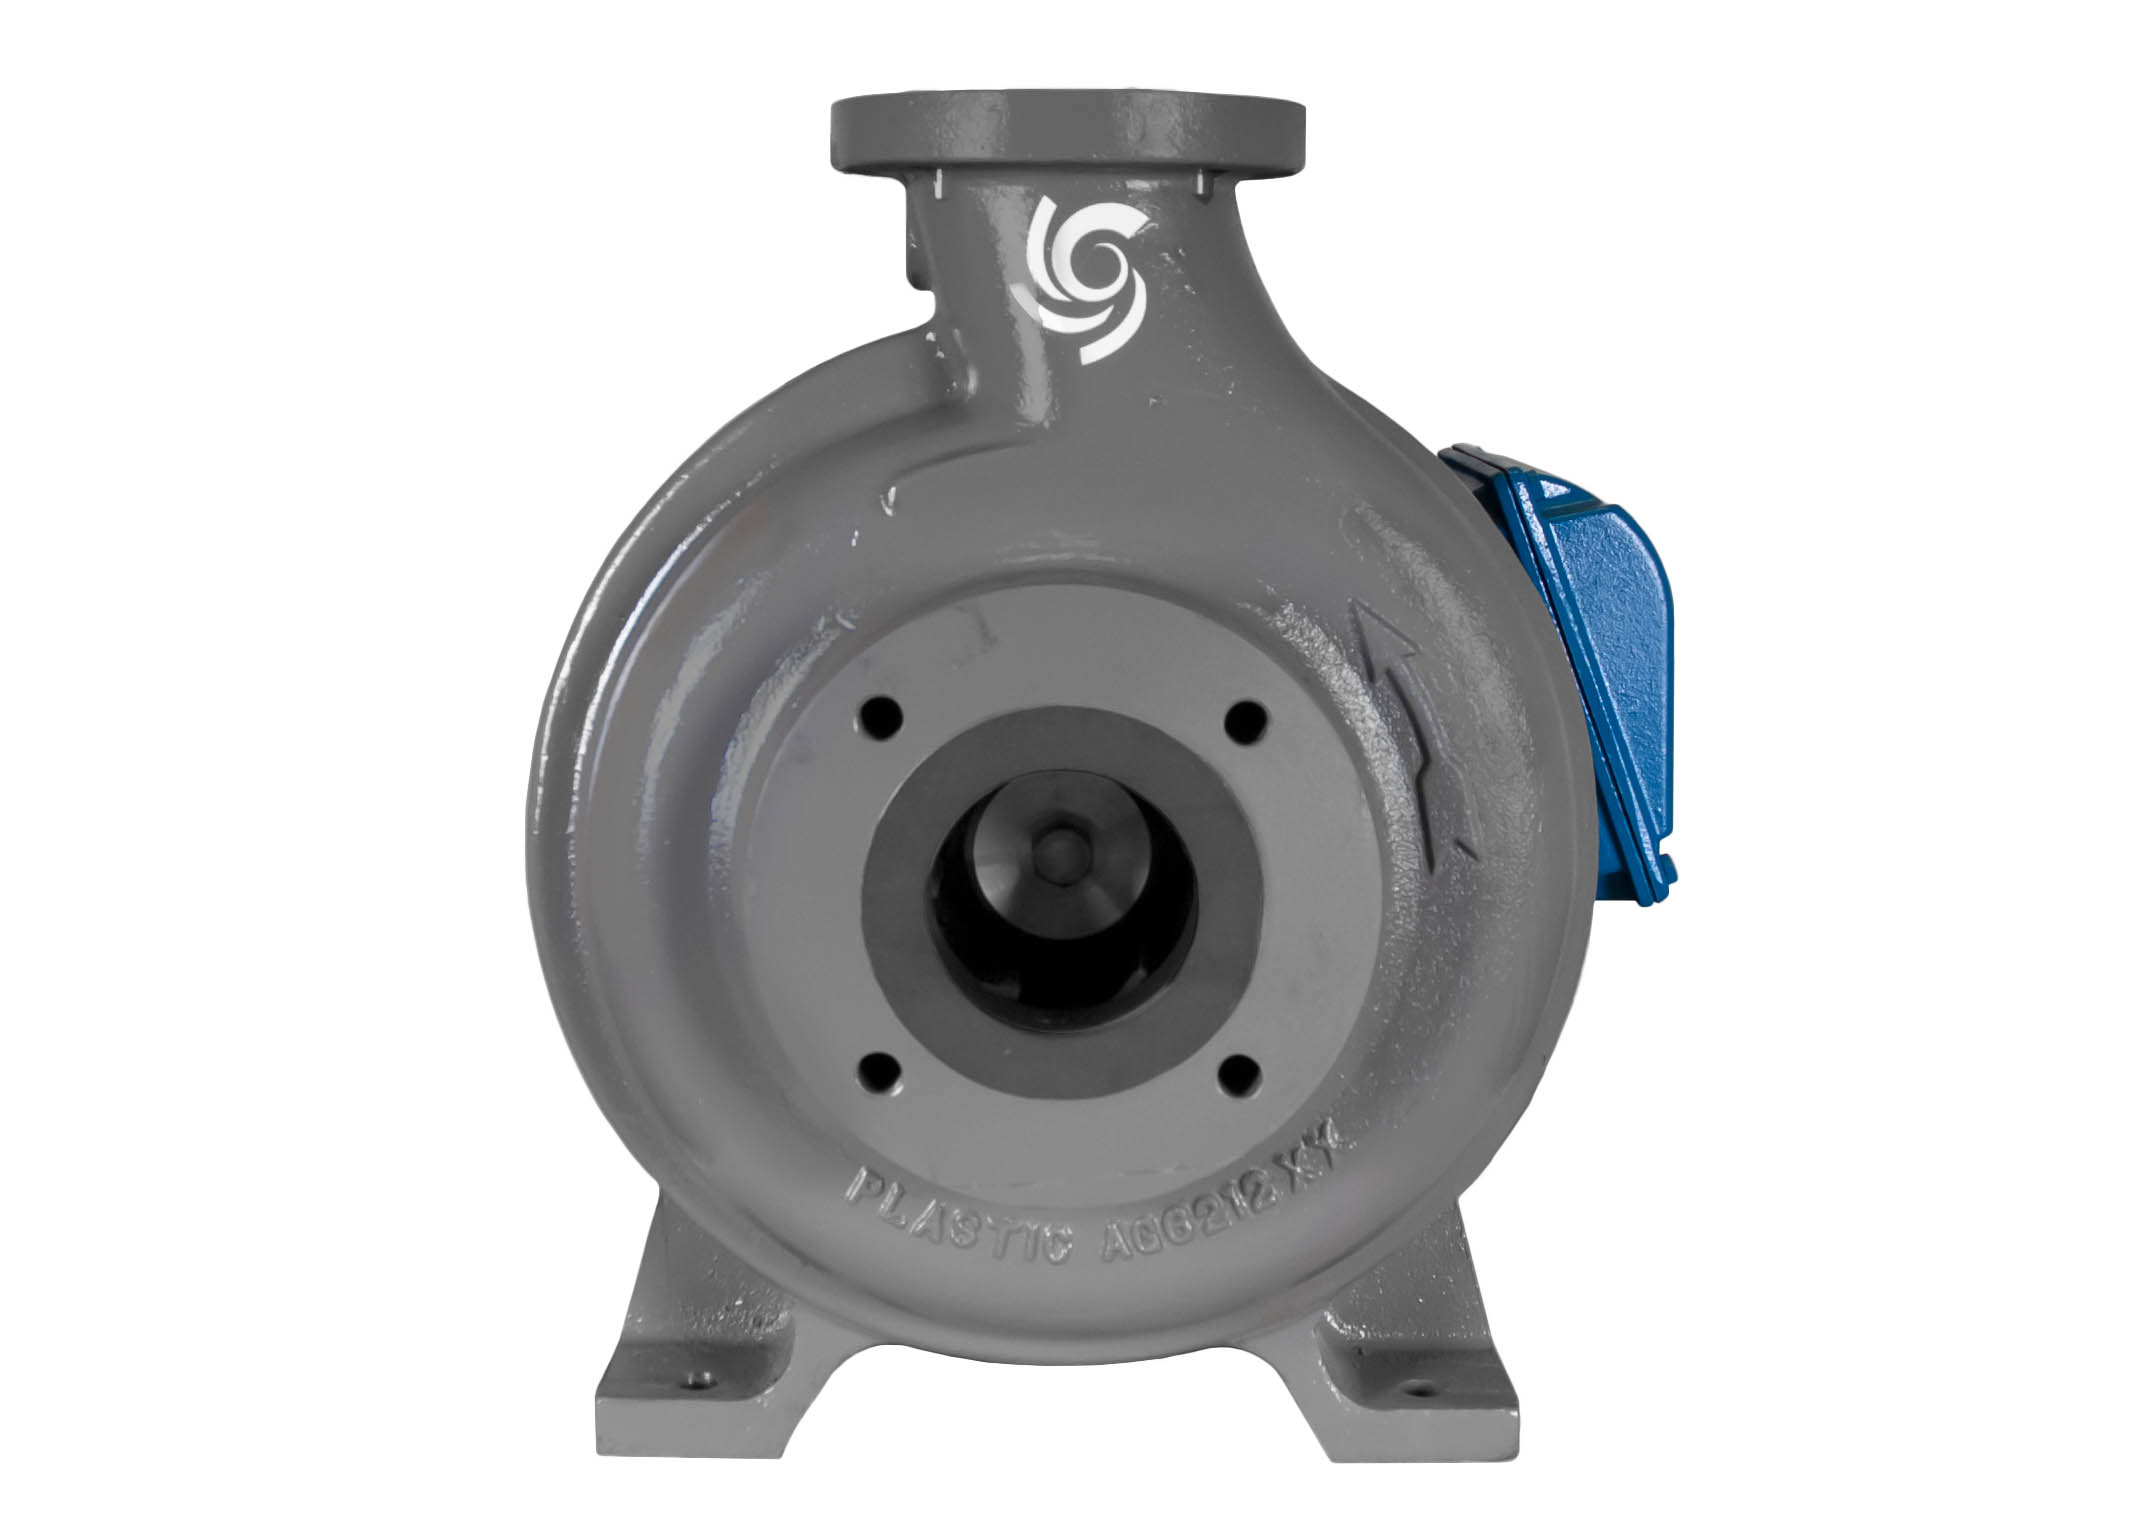 C-Shell 3x2-10 Pump with blue WEG Motor front view